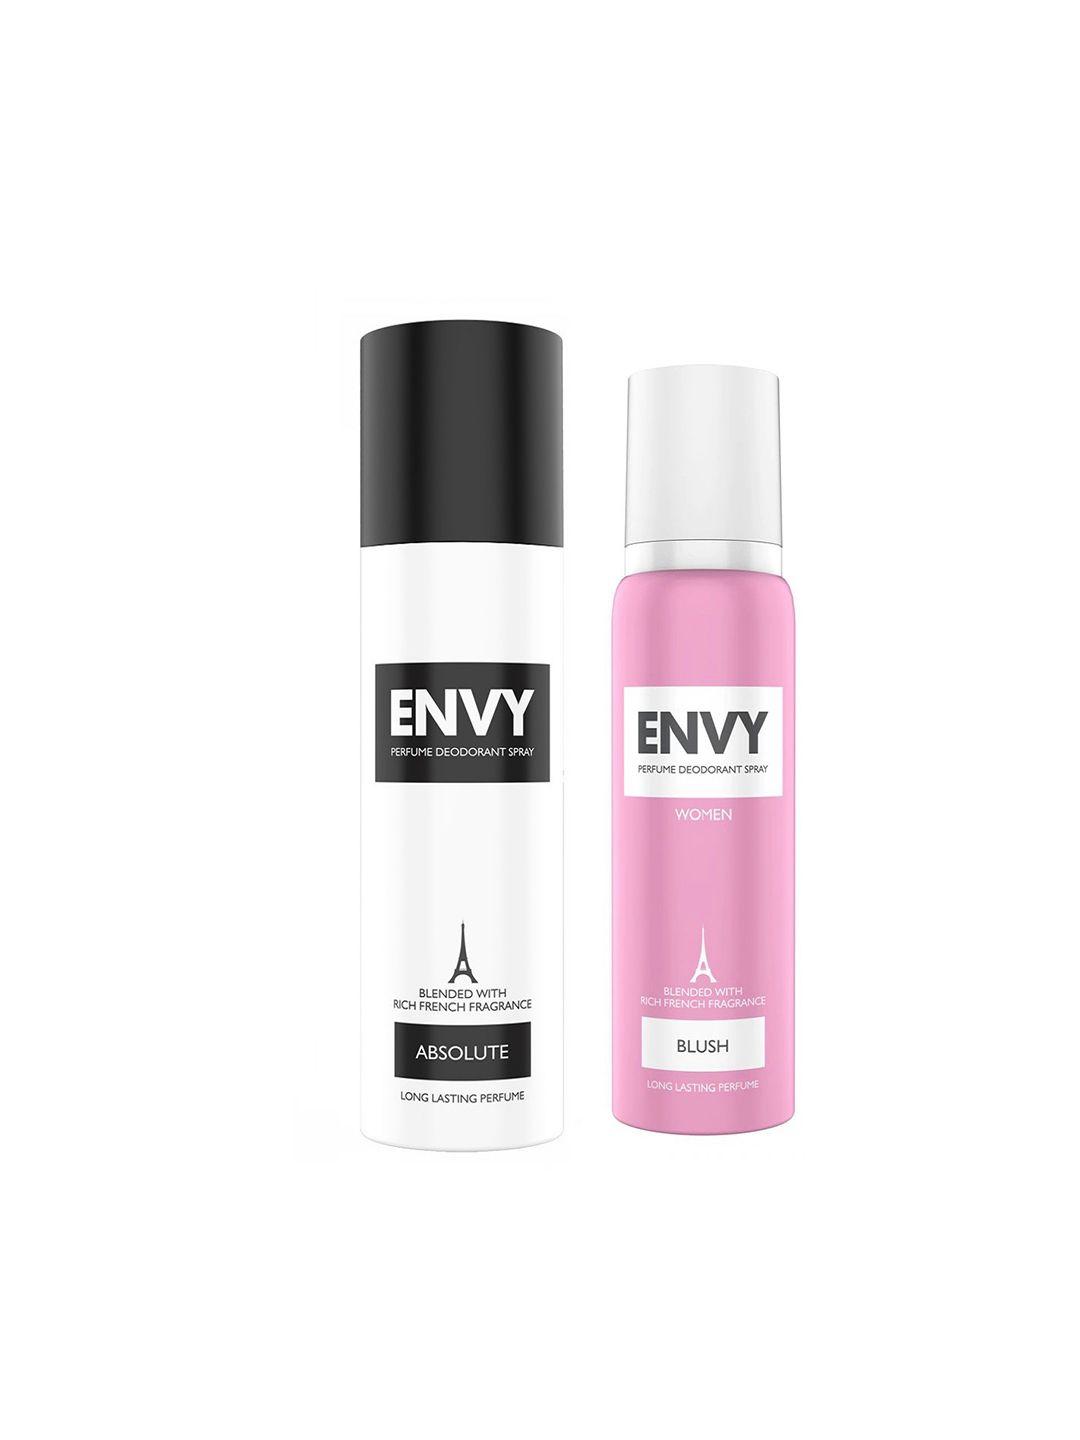 envy men absolute and women blush perfume deodorant 120 ml each